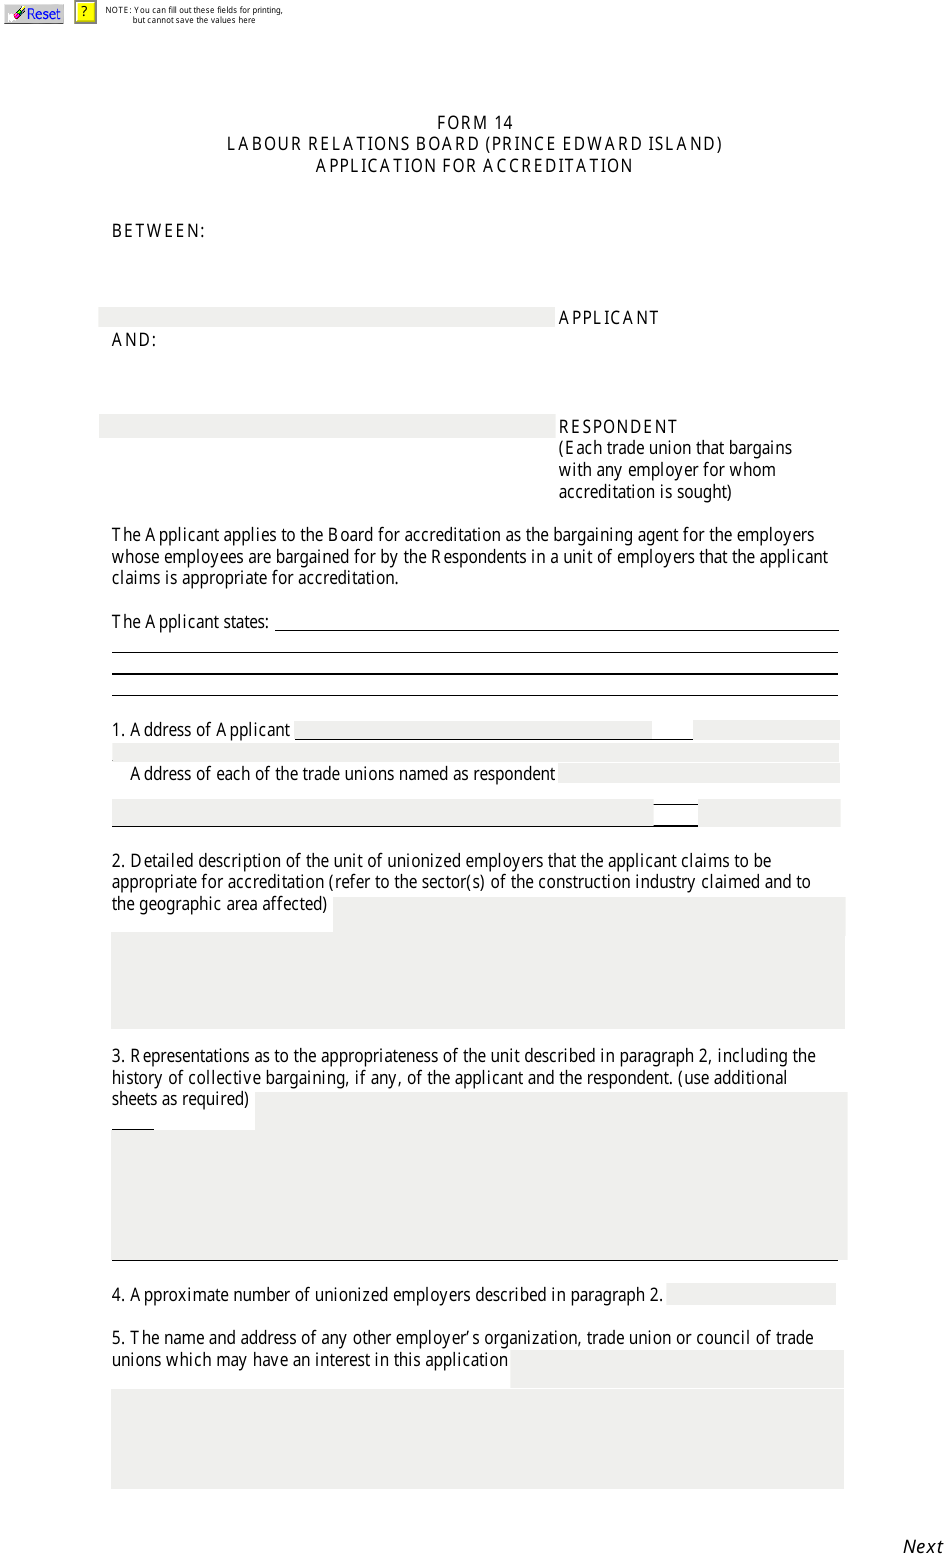 Form 14 Application for Accreditation - Prince Edward Island, Canada, Page 1